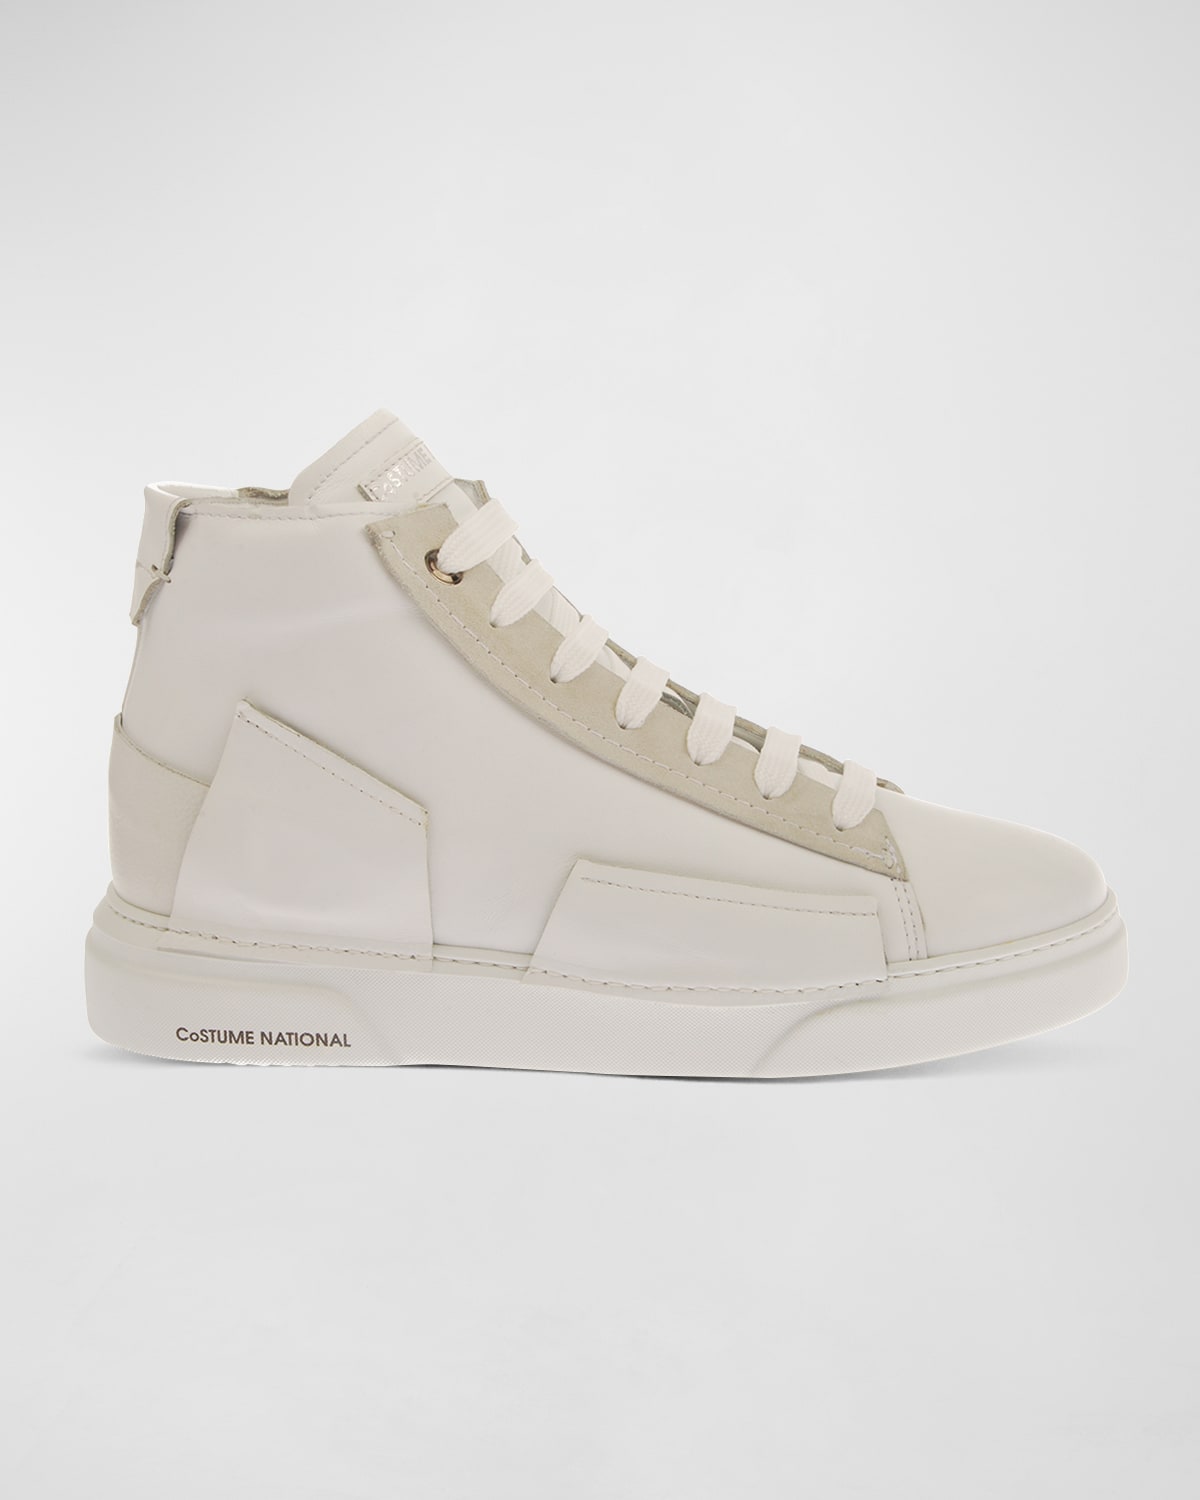 Costume National White Sneaker | Neiman Marcus